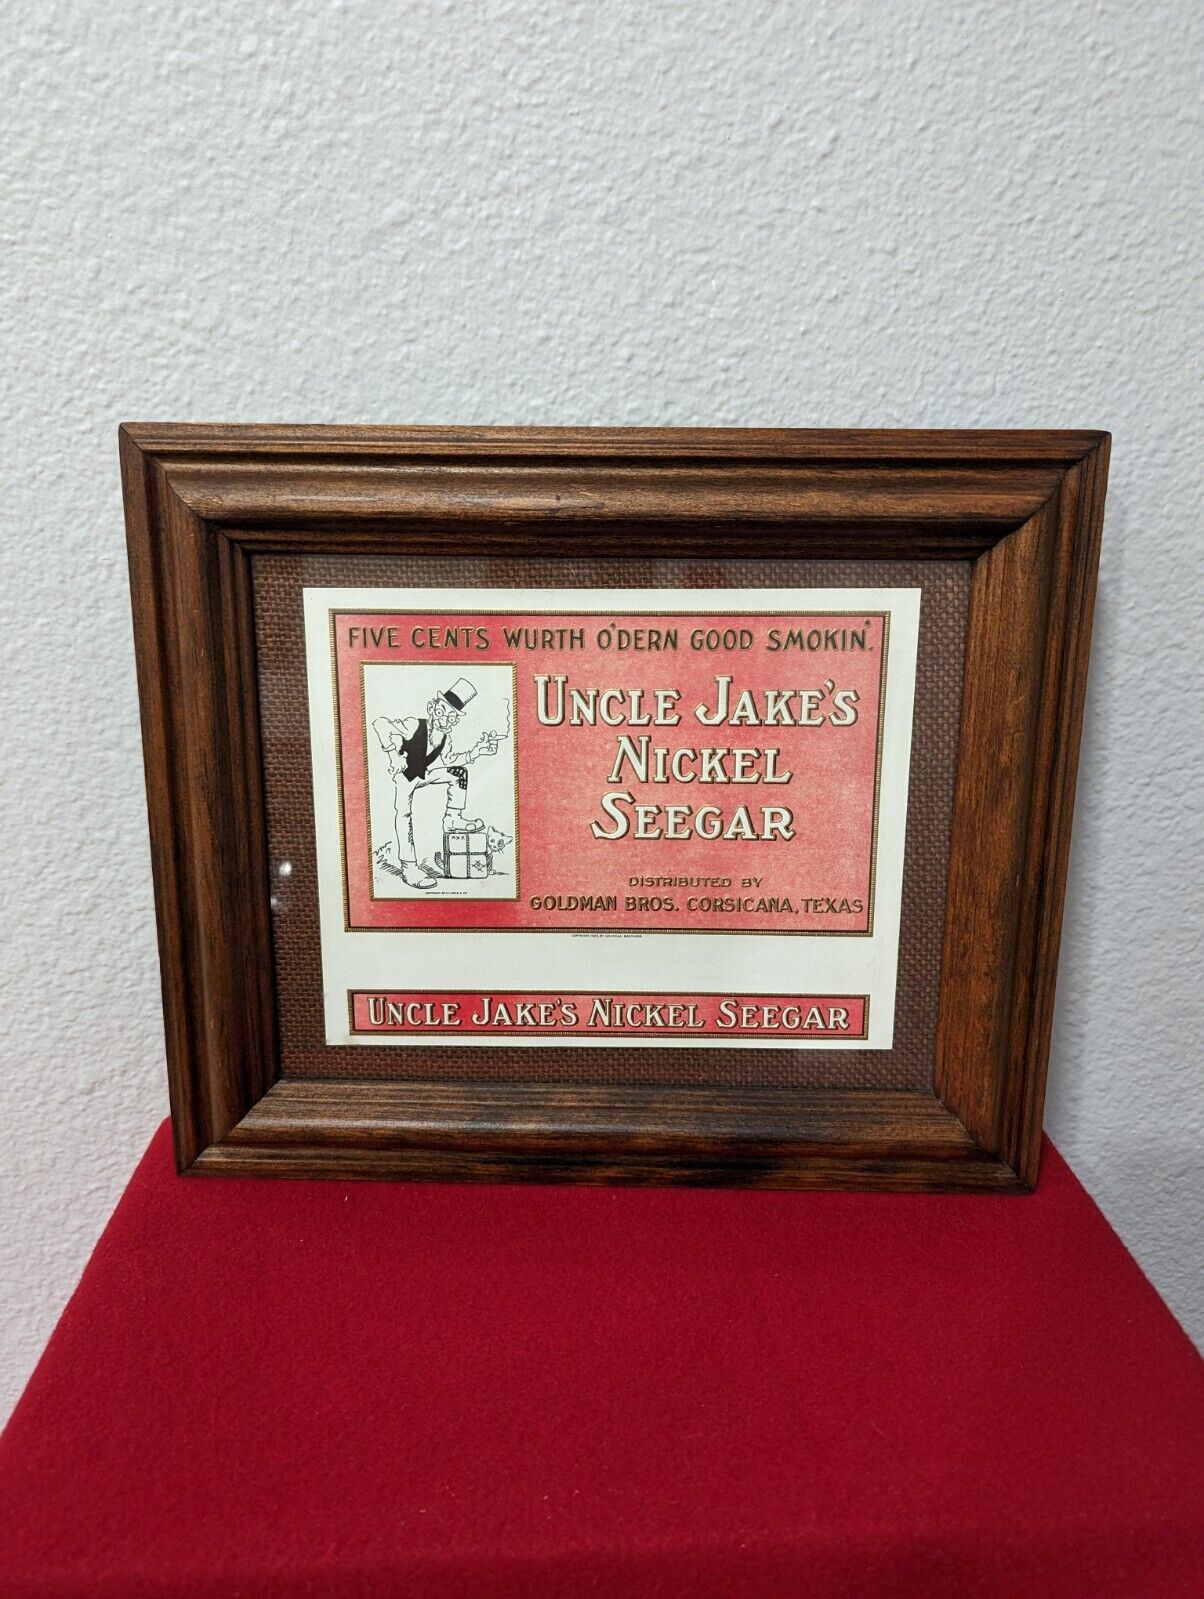 VINTAGE Original 1925 CIGAR BOX LABEL UNCLE JAKE'S NICKEL SEEGAR #810 Framed